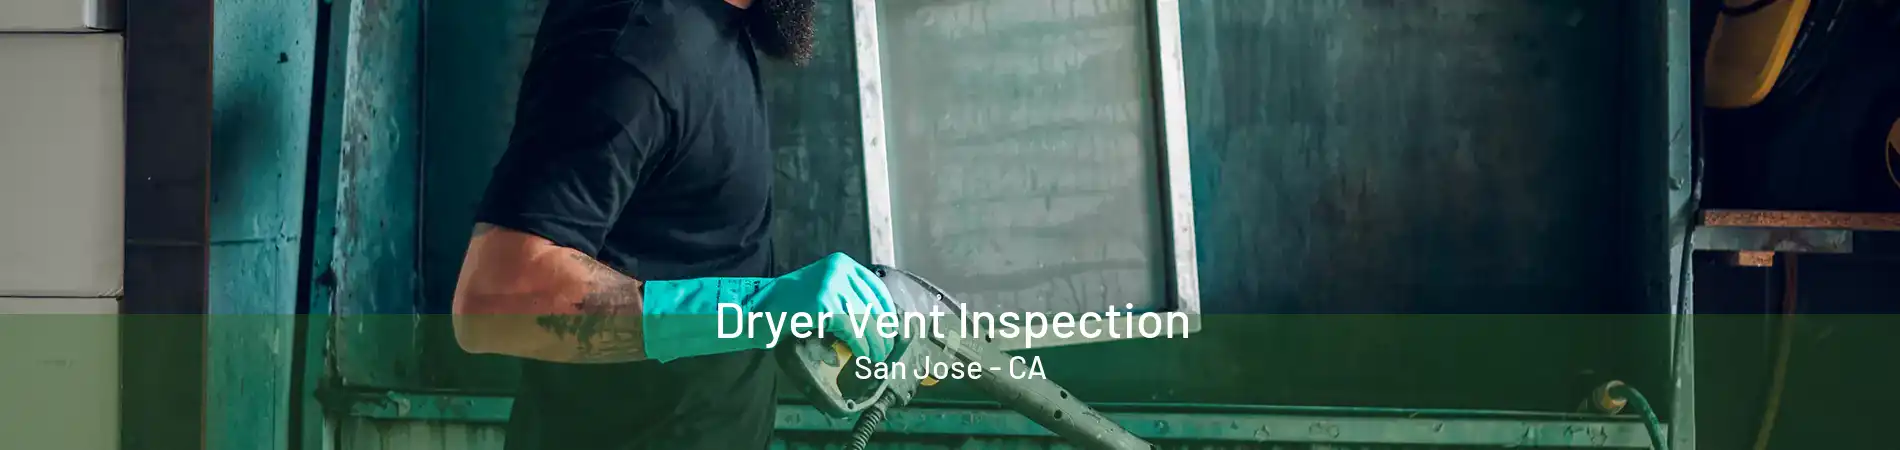 Dryer Vent Inspection San Jose - CA